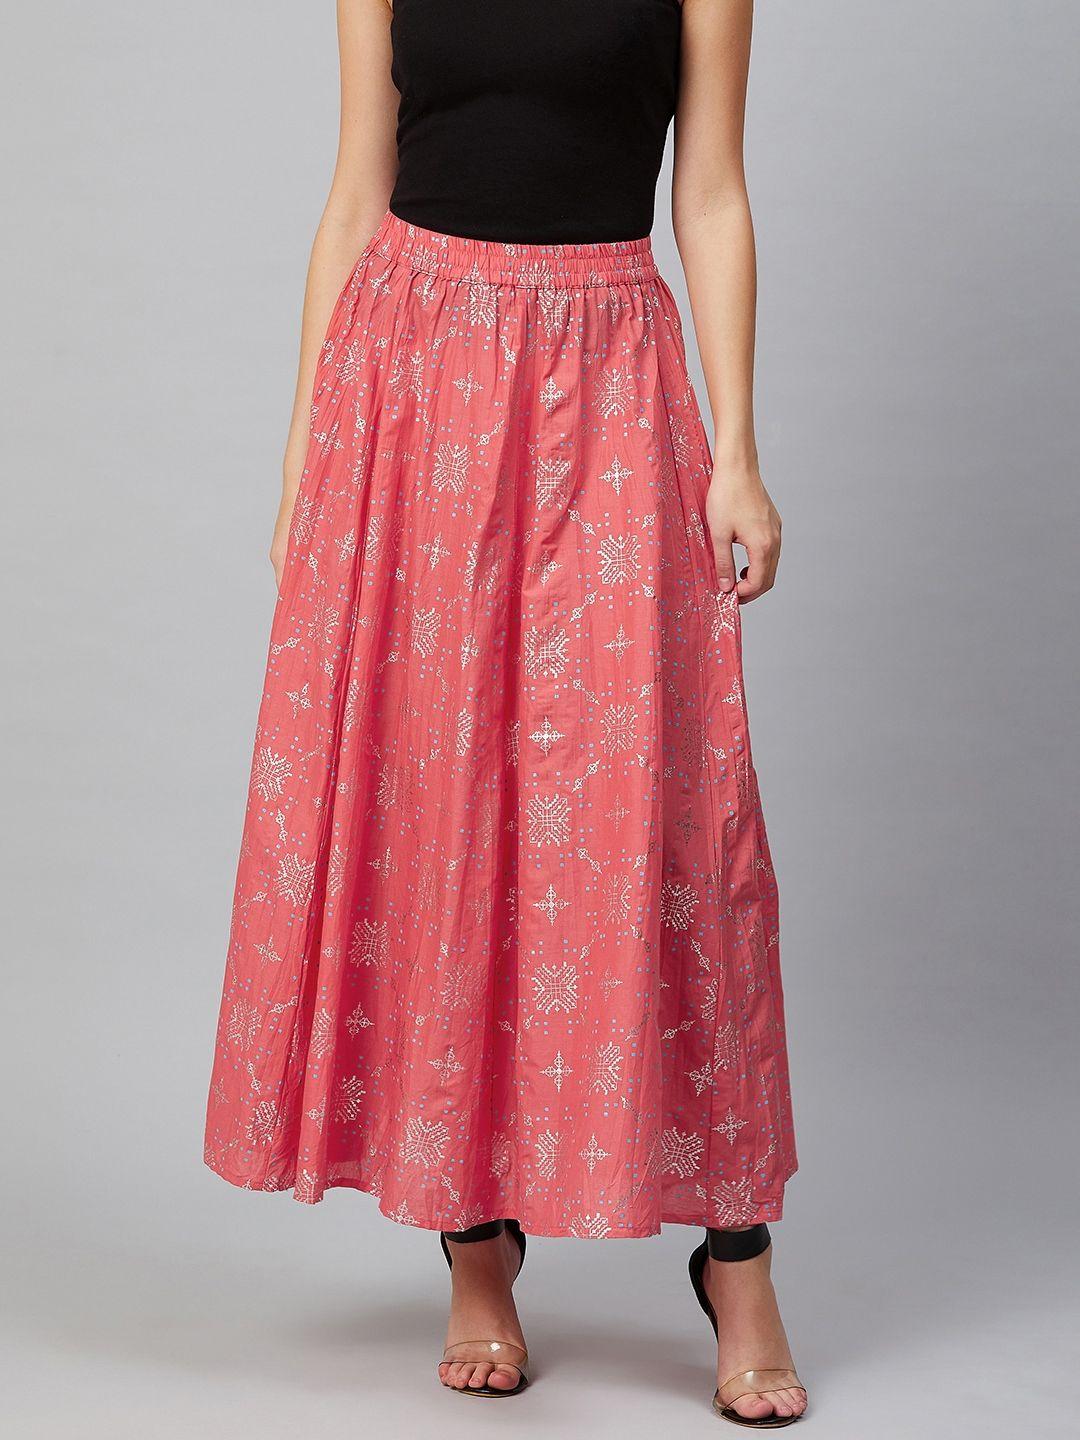 aurelia women coral pink & silver printed flared maxi skirt